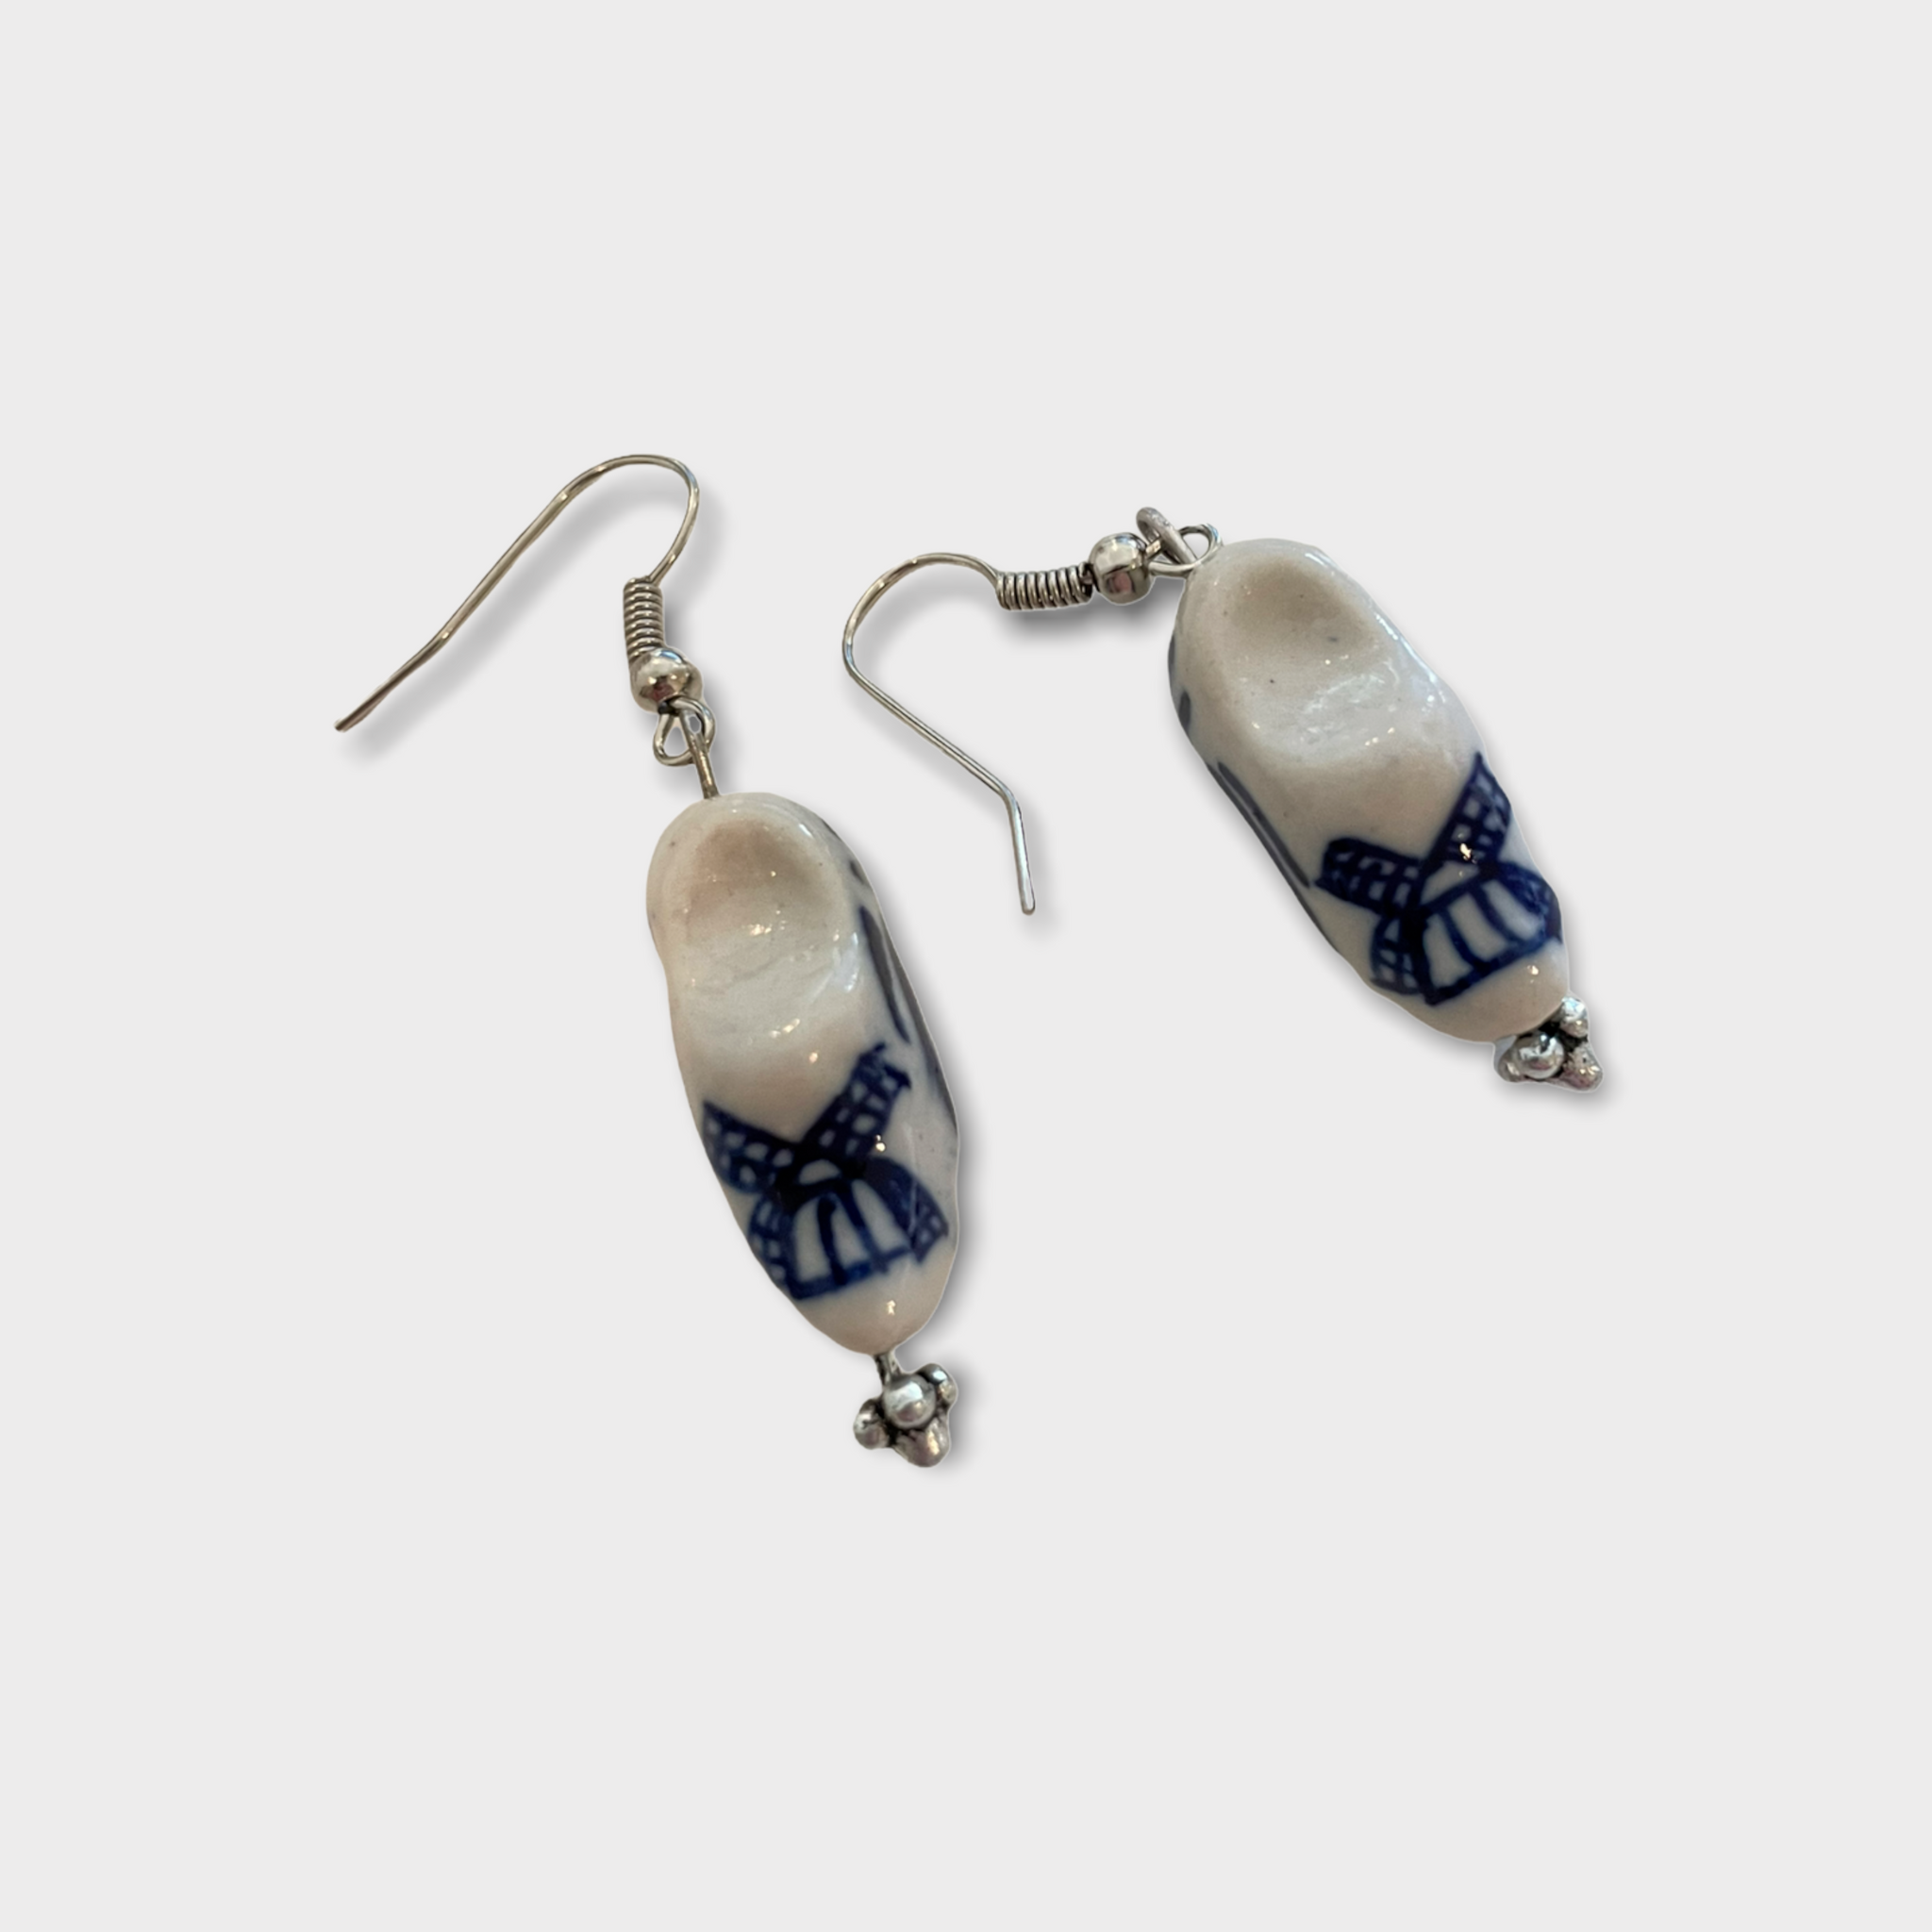 Dutch Heritage Delft blue ceramic earrings